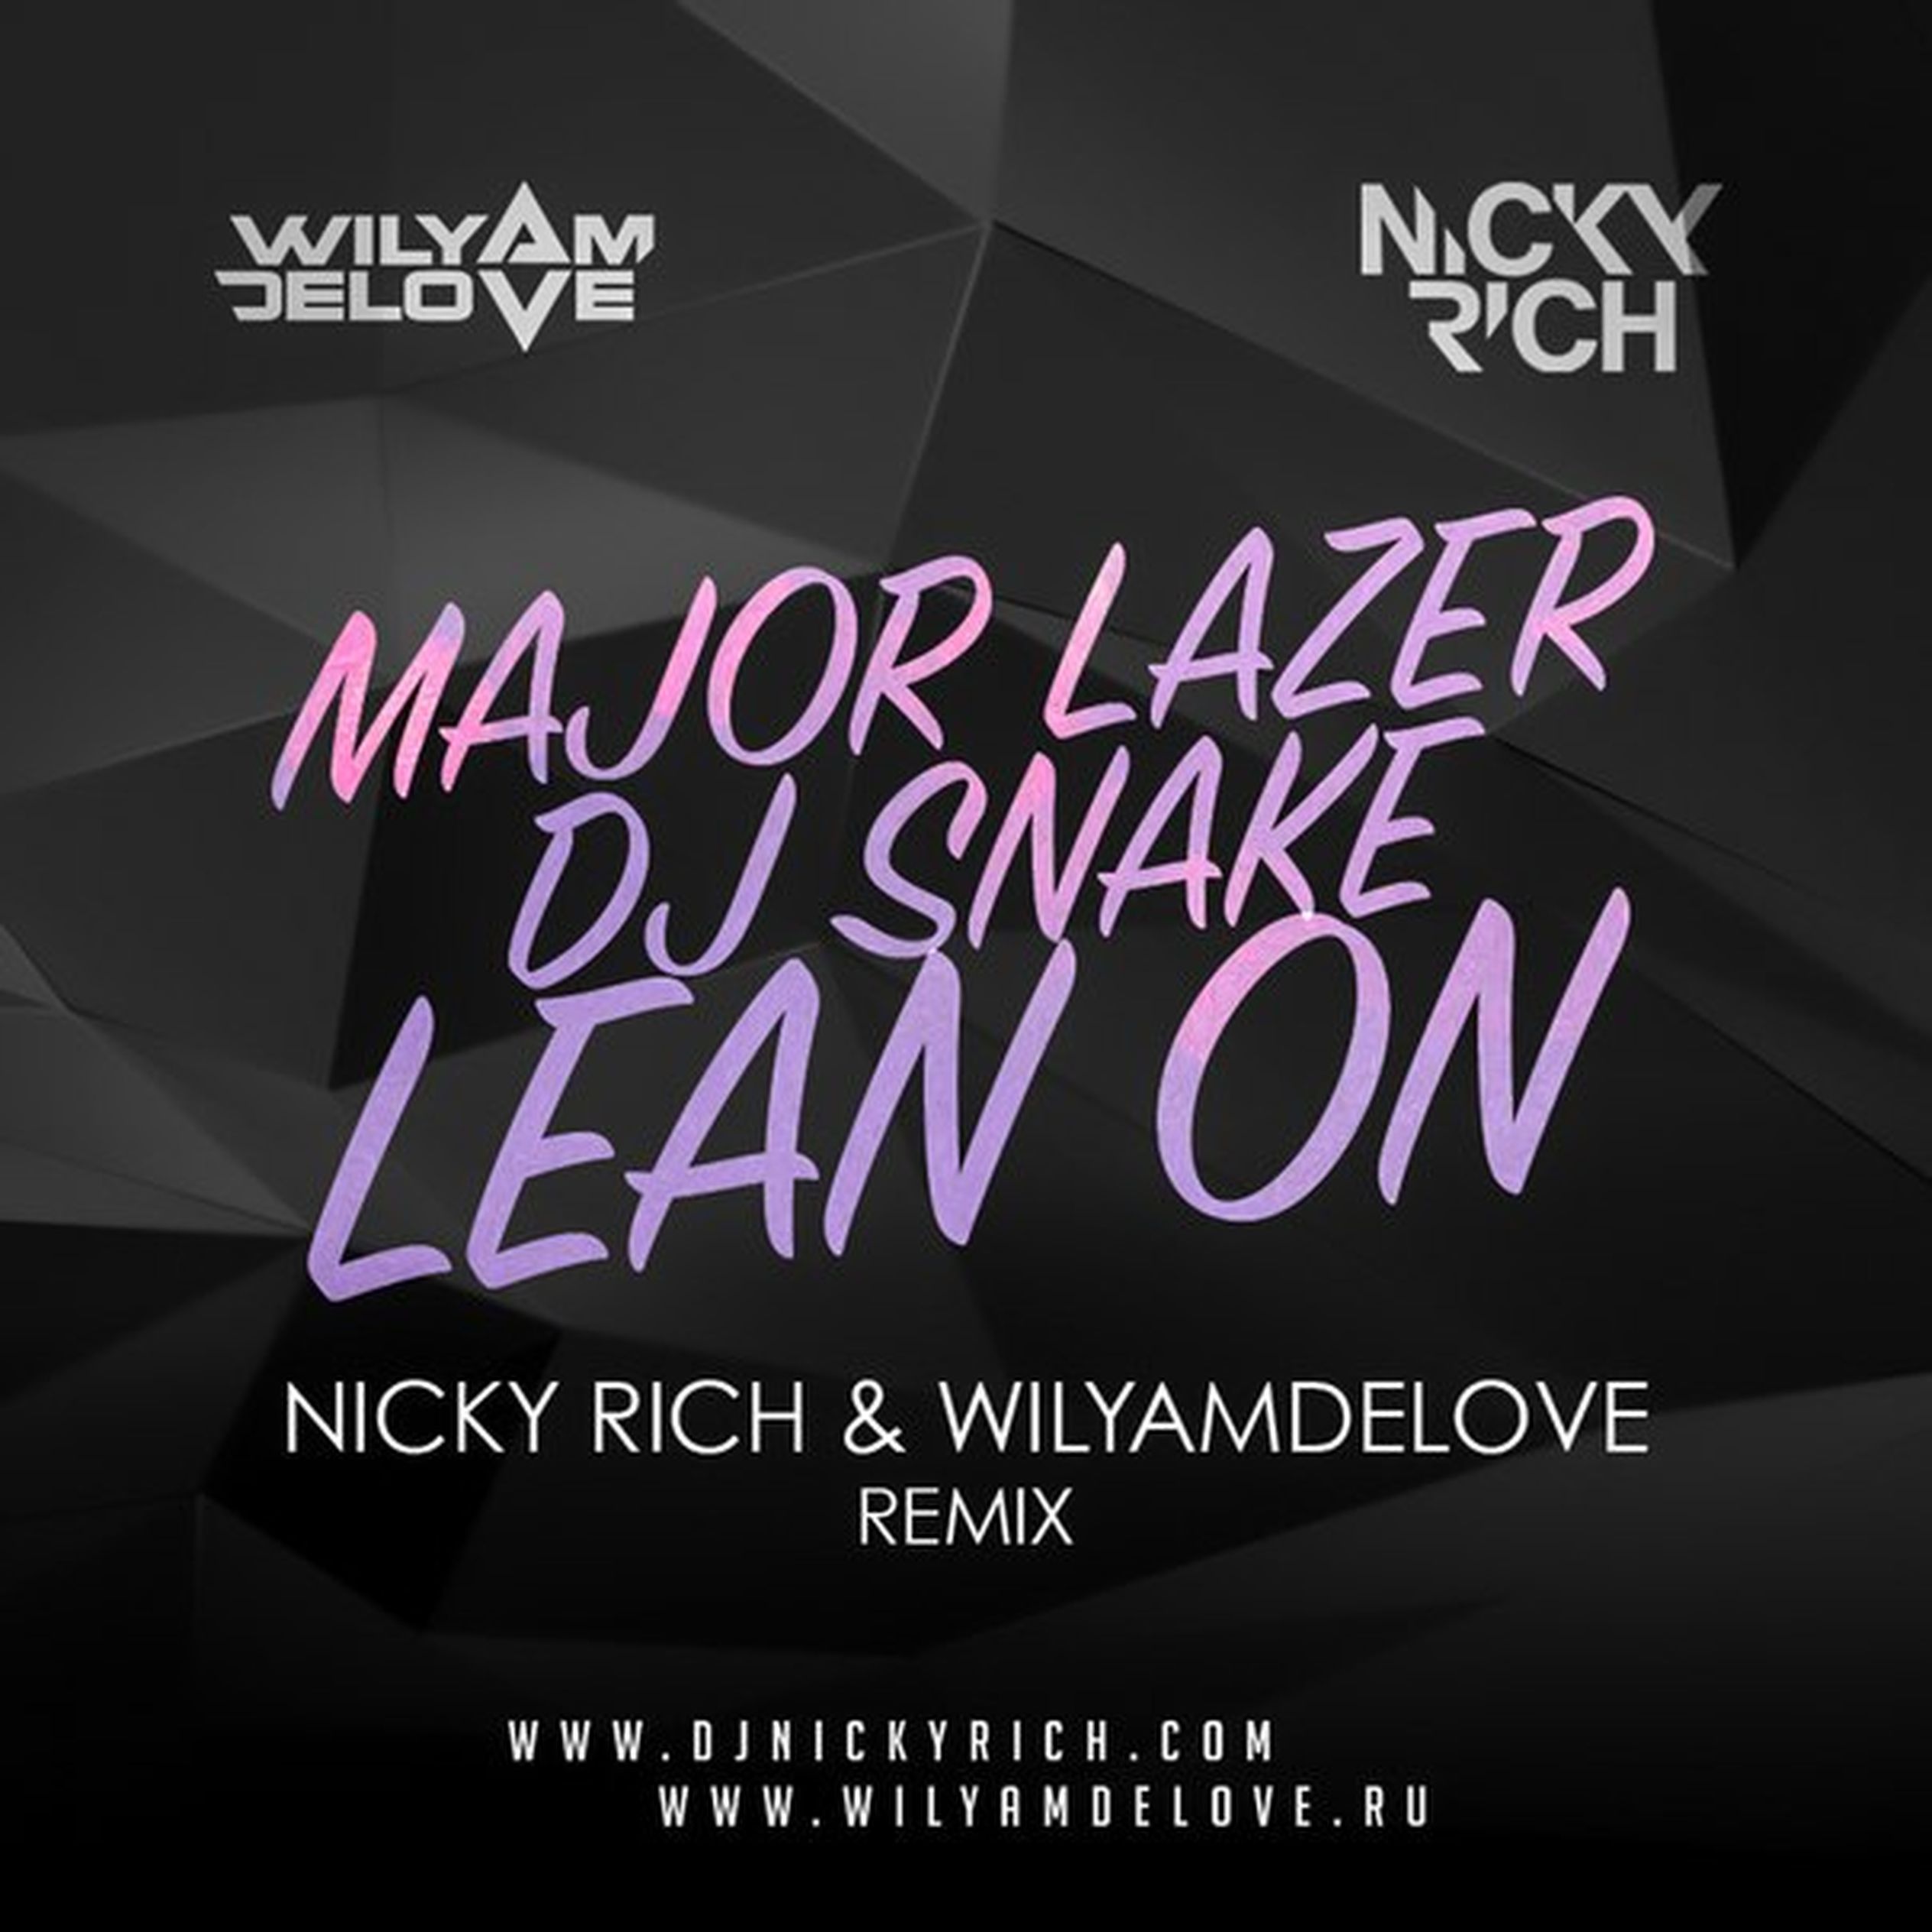 Major lazer remix. Major Lazer DJ Snake. Nicky Rich. WILYAMDELOVE. WILYAMDELOVE биография.